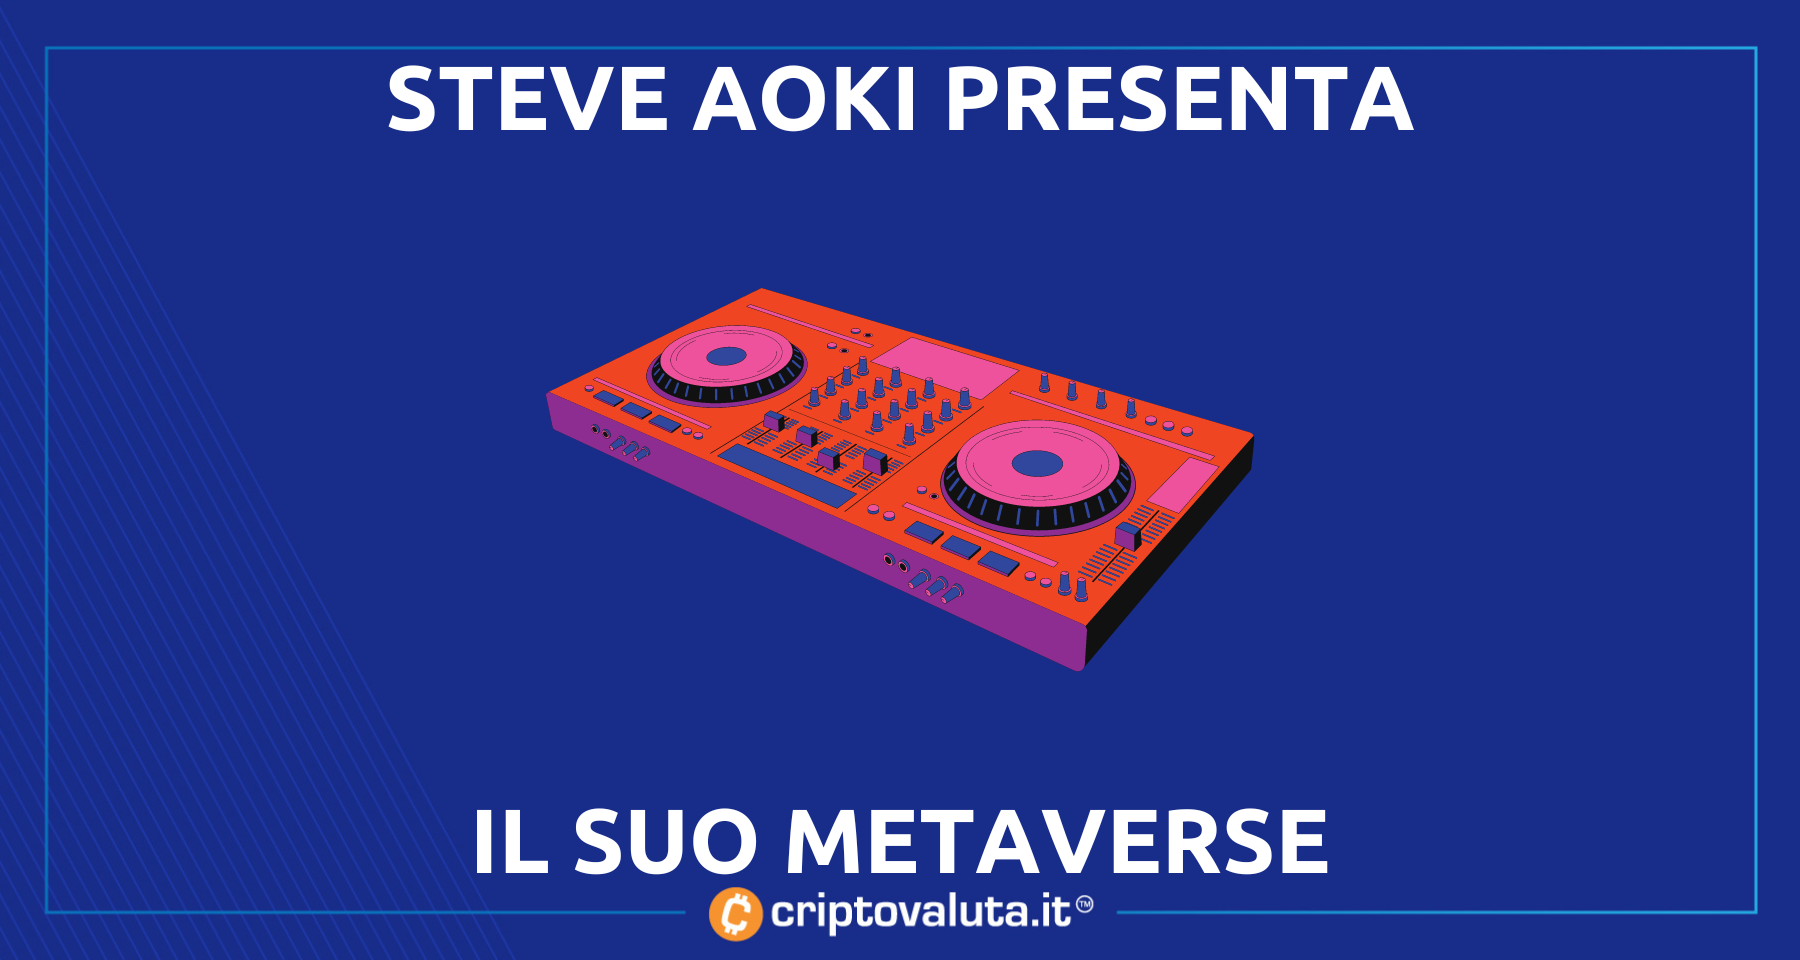 Steve Aoki prepara il suo metaverse | Musica su chain e NFT